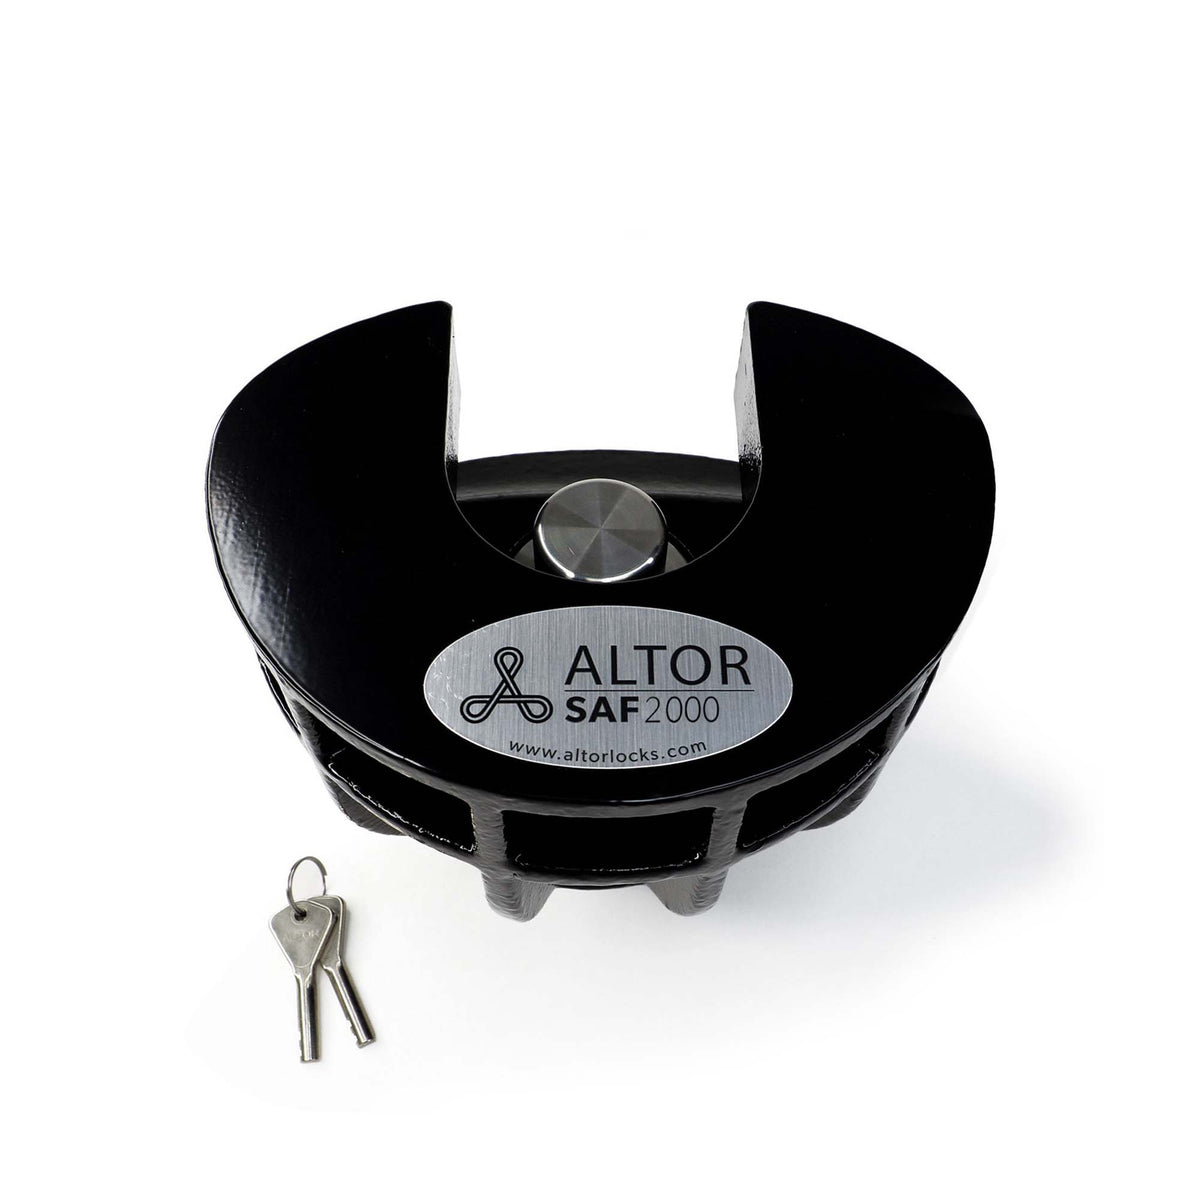 Altor SAF Trailer Lock